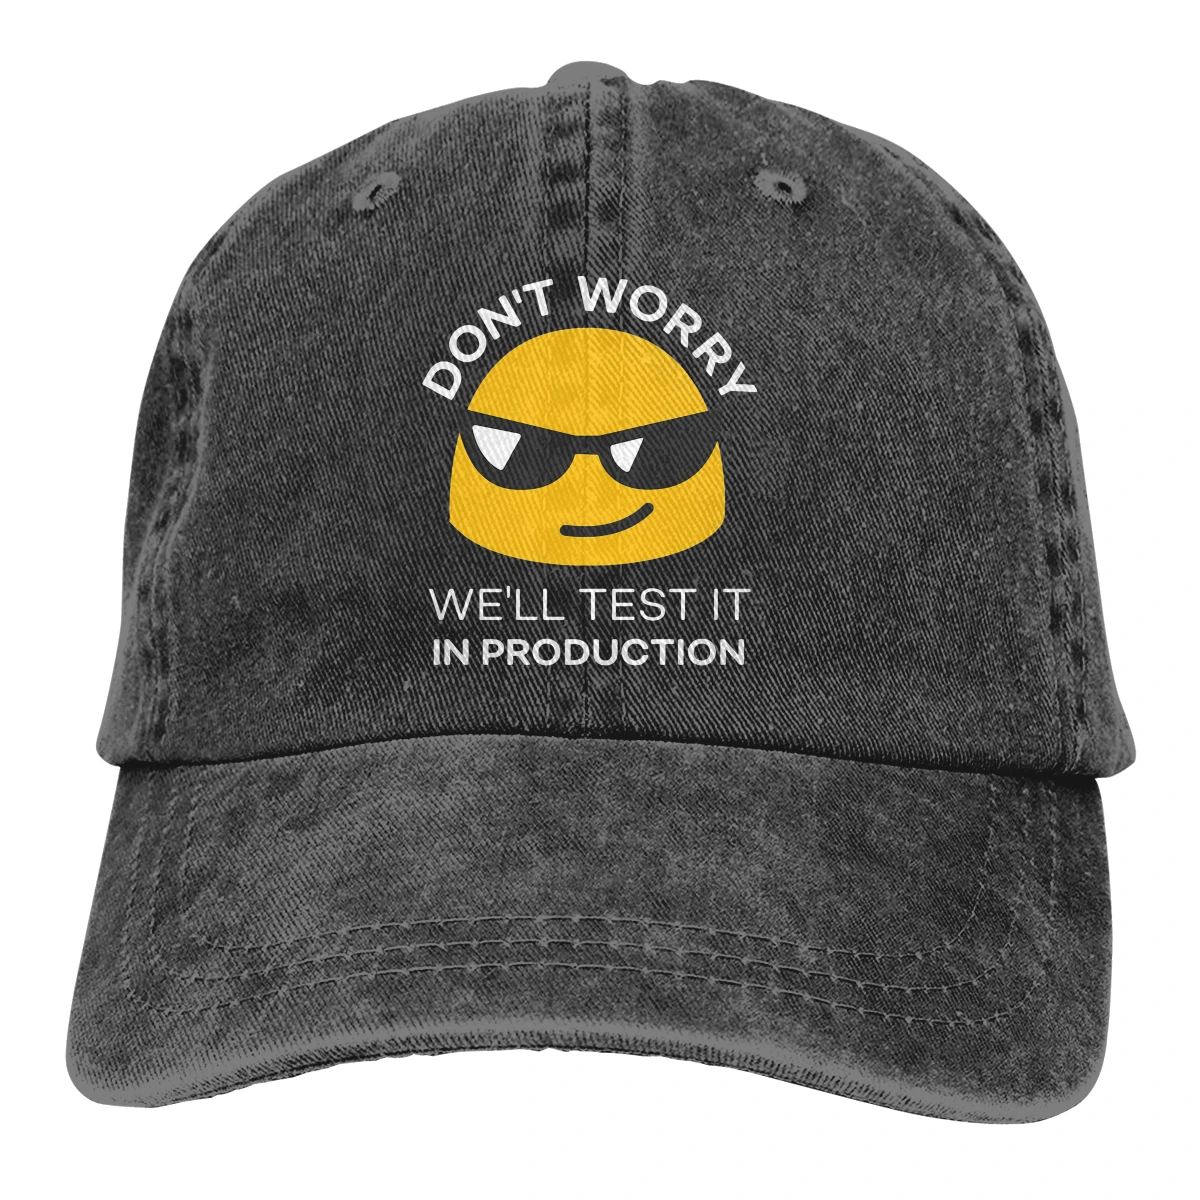 

We'll Test It In Production Baseball Caps Peaked Cap Software Developer IT Coder Programmer Geek Sun Shade Hats for Men